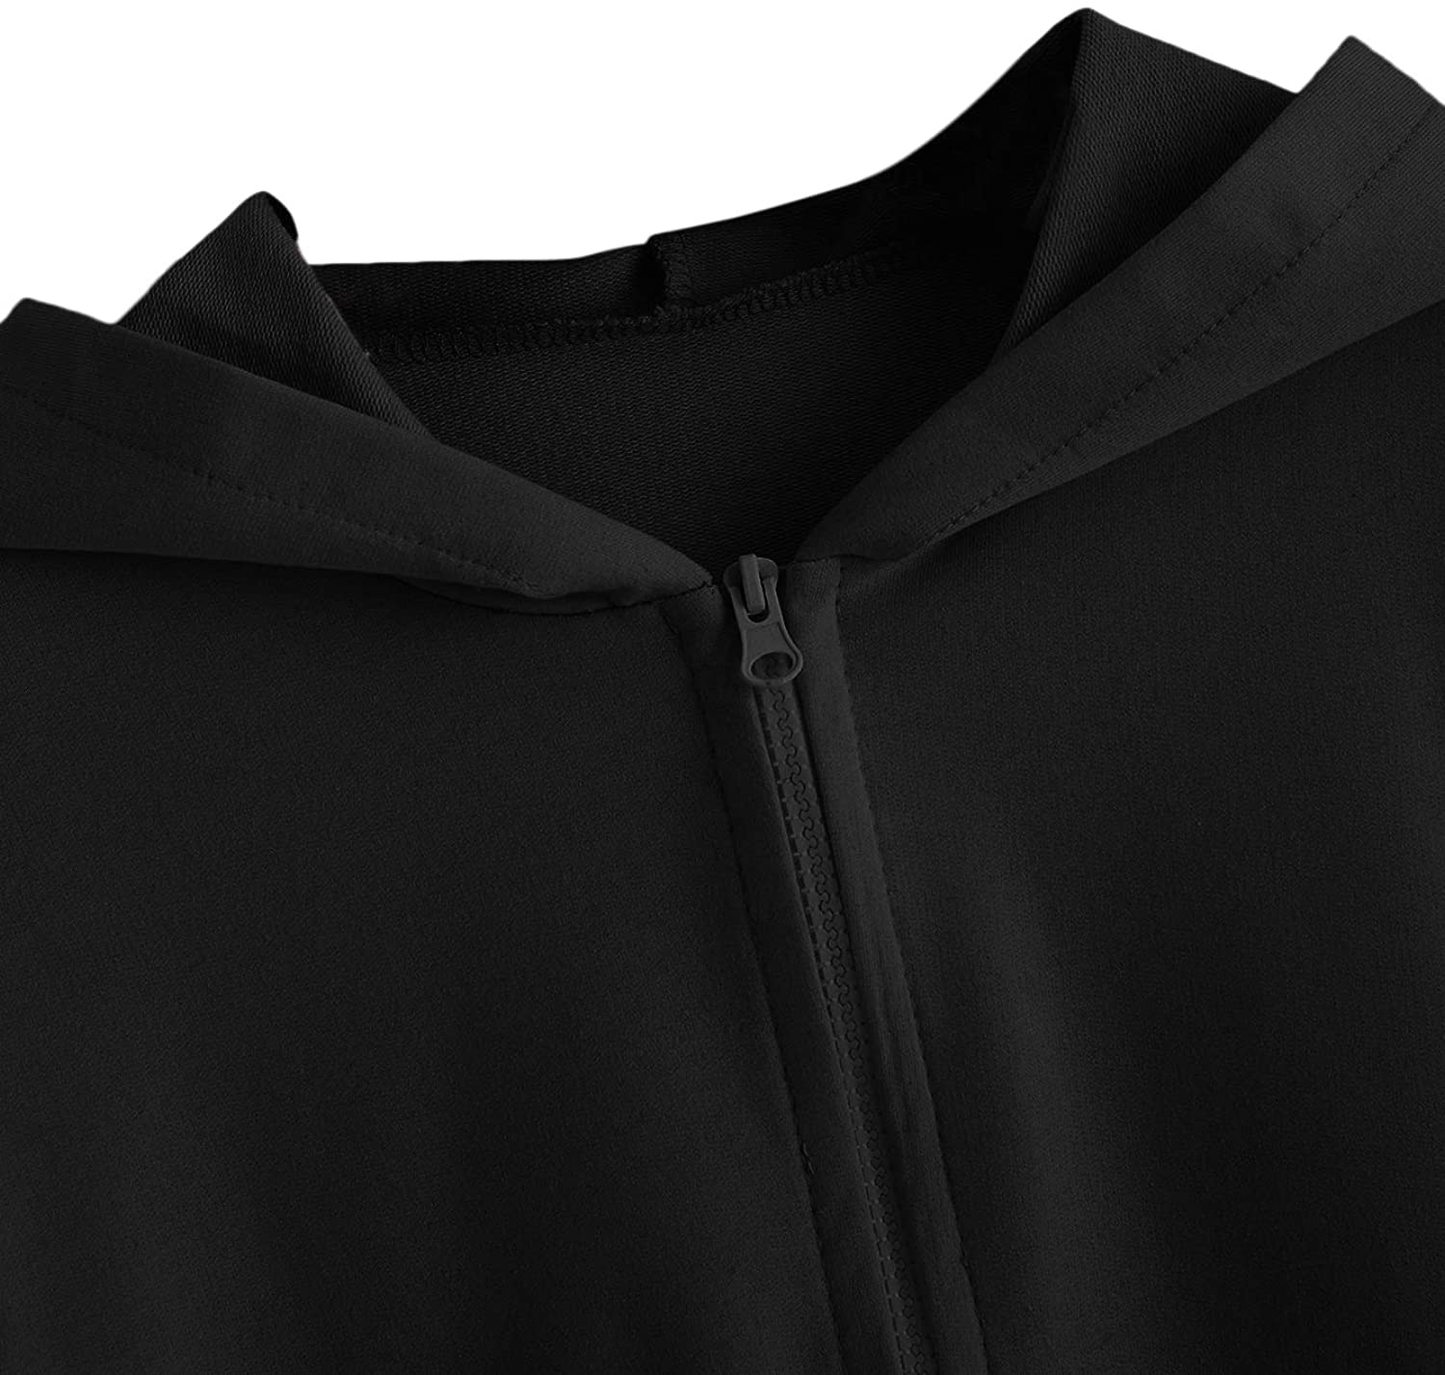 SheIn Women's Lightweight Long Sleeve Zip Up Crop Hoodie Sweatshirt with Pockets